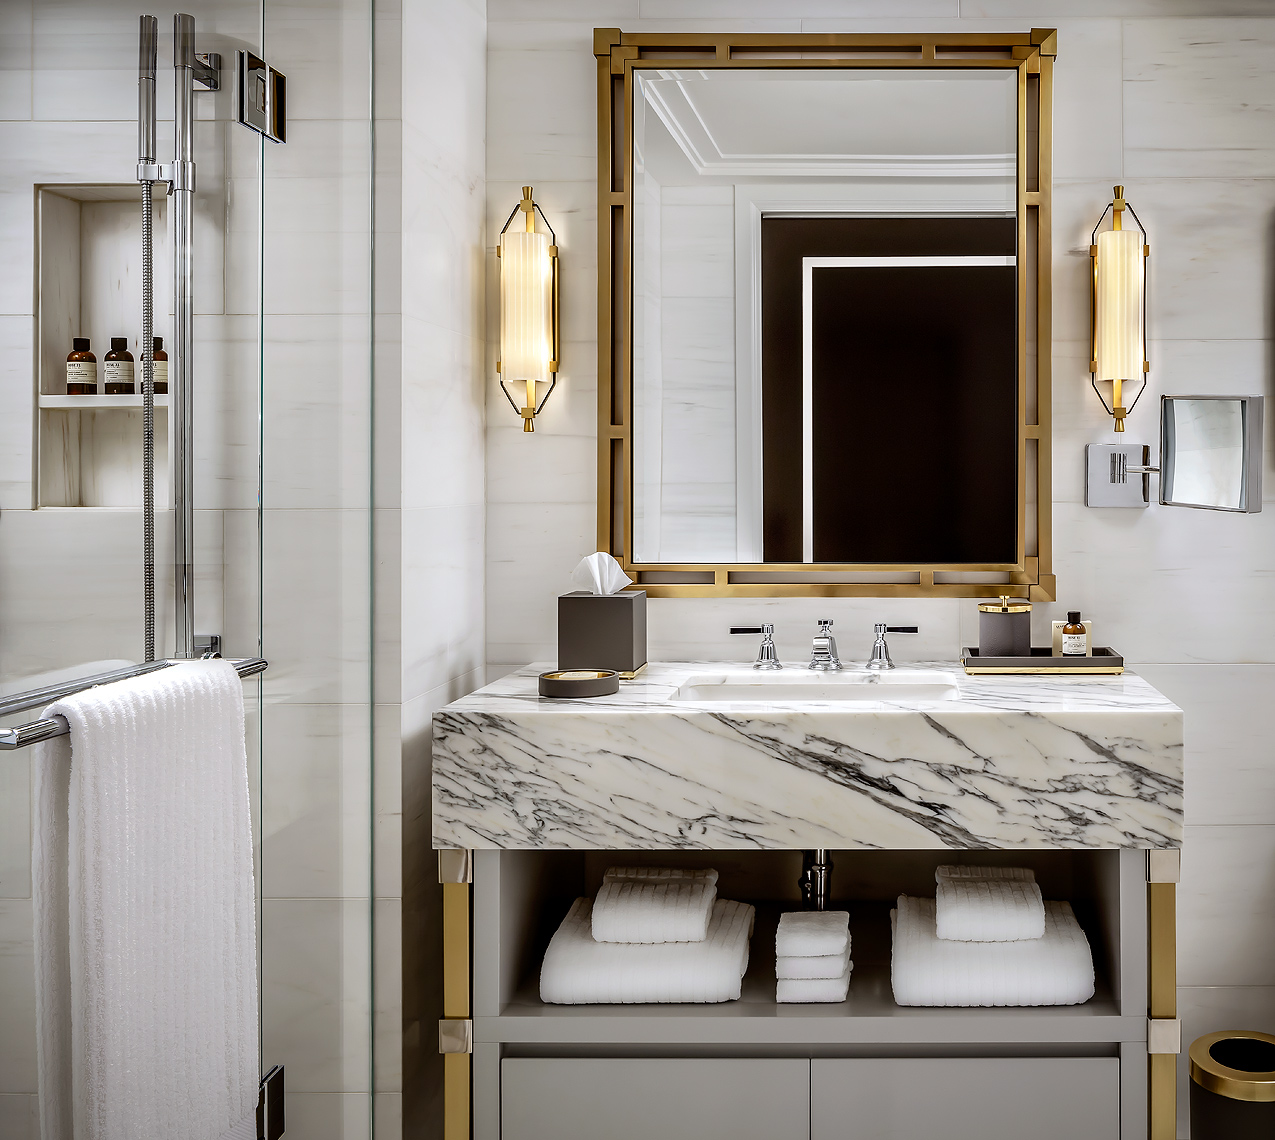 Fairmont Royal York Hotel Toronto, Bathroom - Champlimaud Design